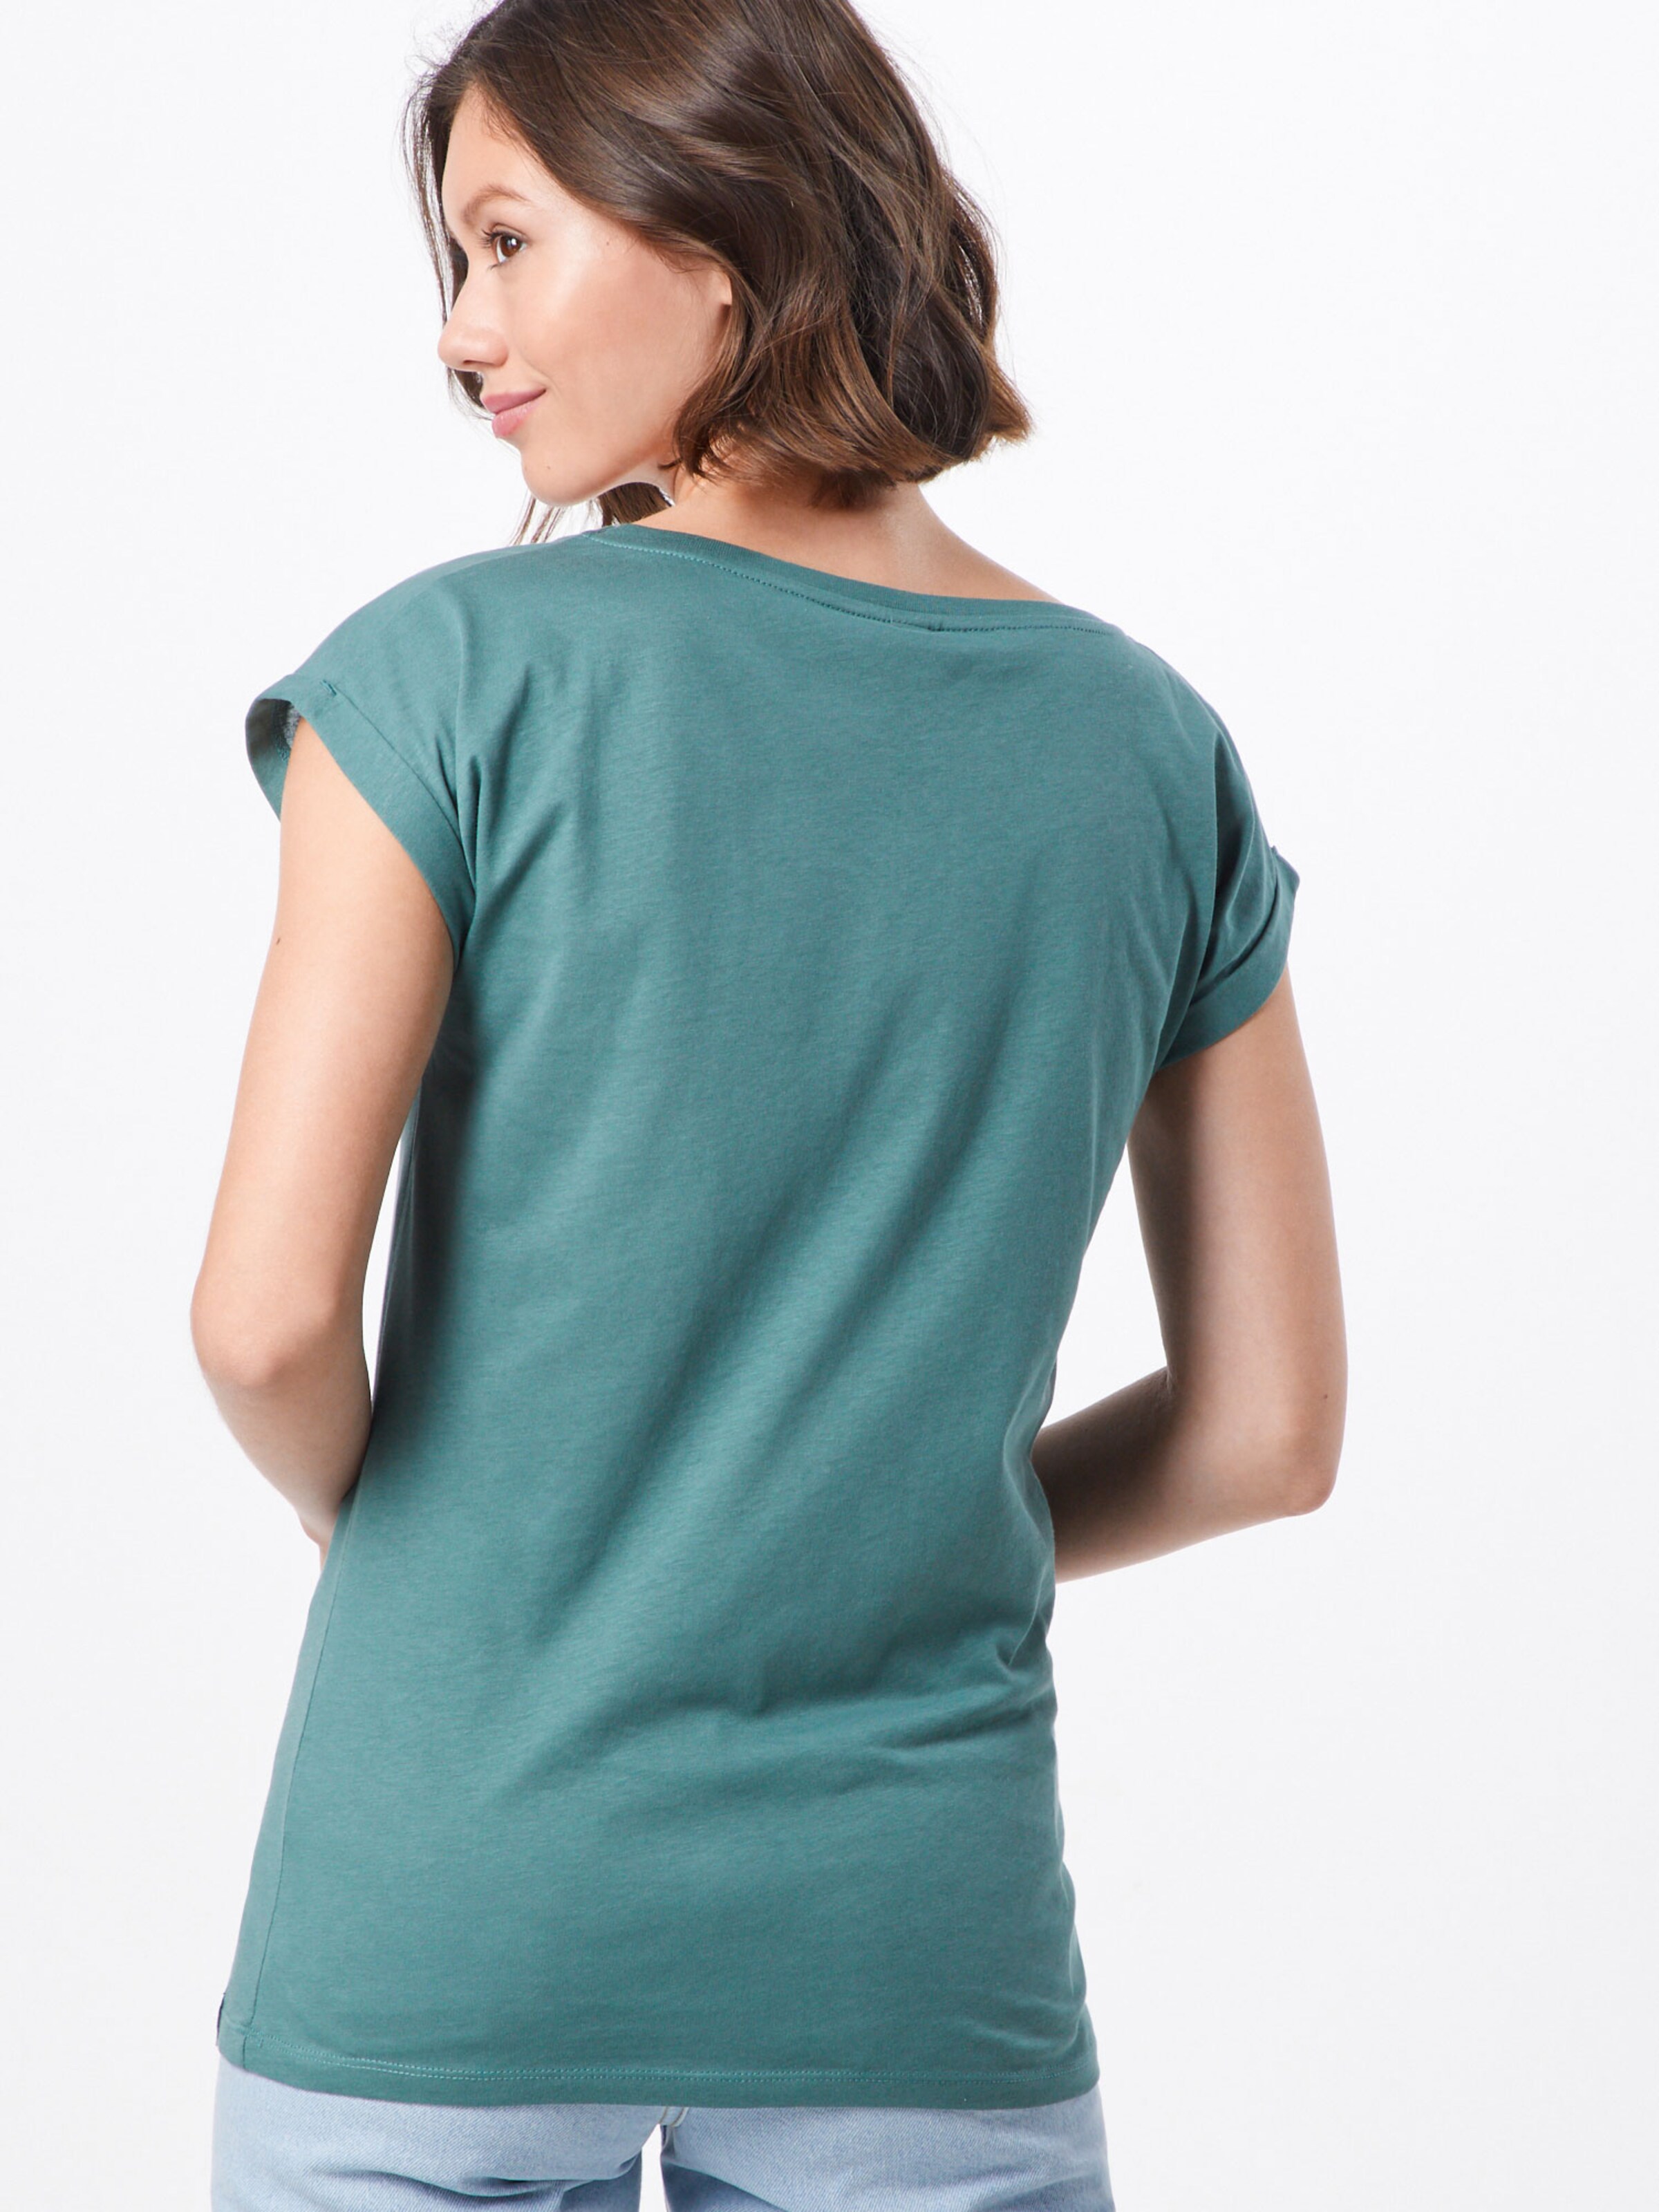 Frauen Shirts & Tops Iriedaily Shirt 'Pusteblume' in Smaragd - RJ01244